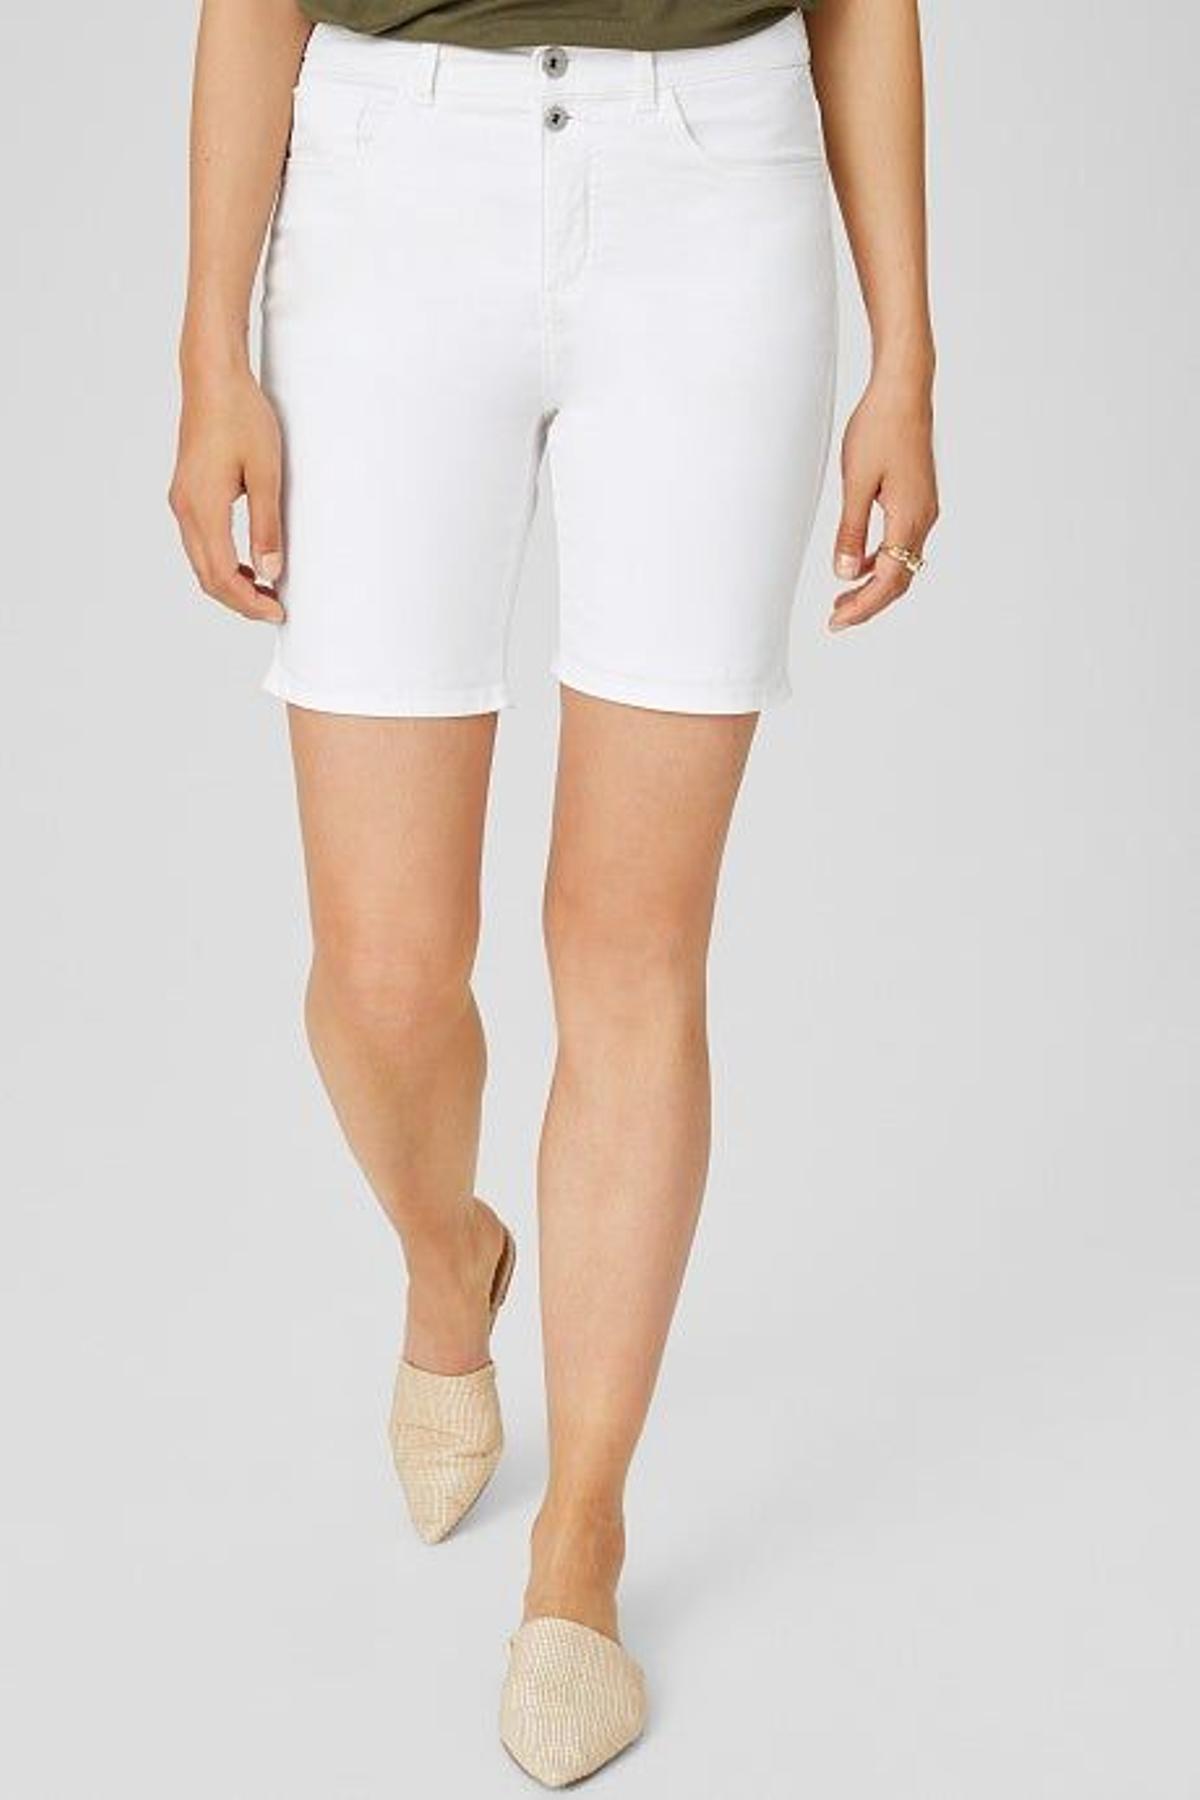 Shorts blancos de C&amp;A (Precio: 7,99 euros)